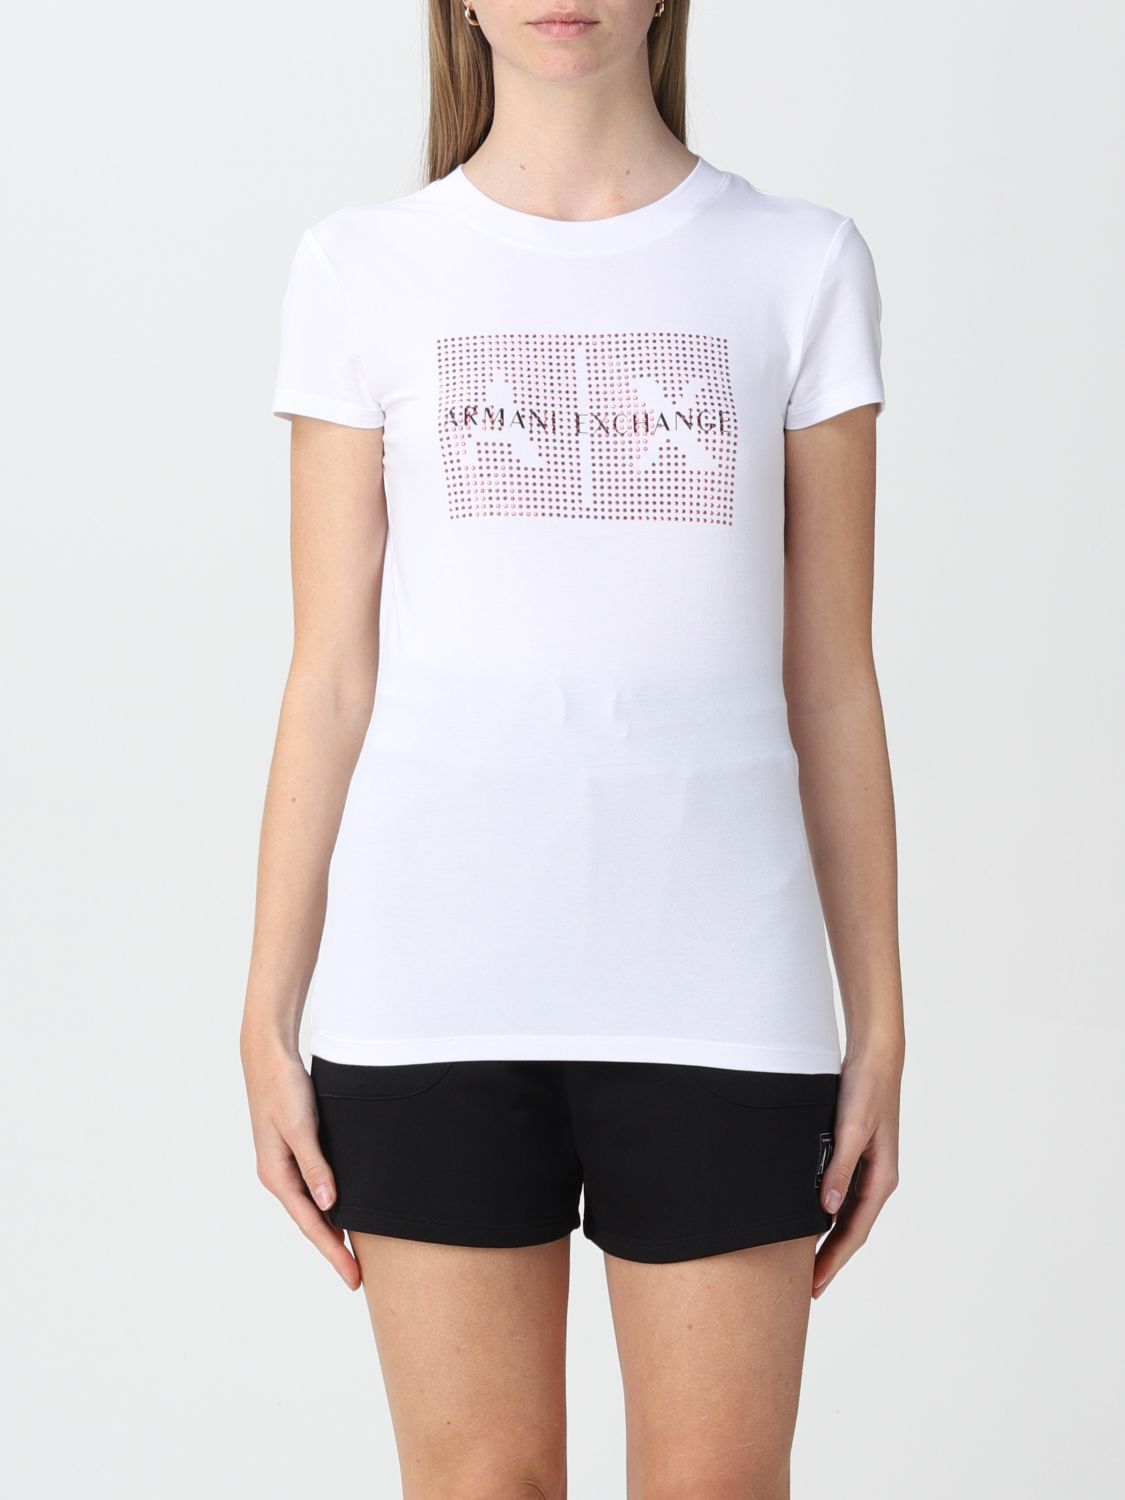 ARMANI EXCHANGE: cotton t-shirt with logo - White | Armani Exchange t ...